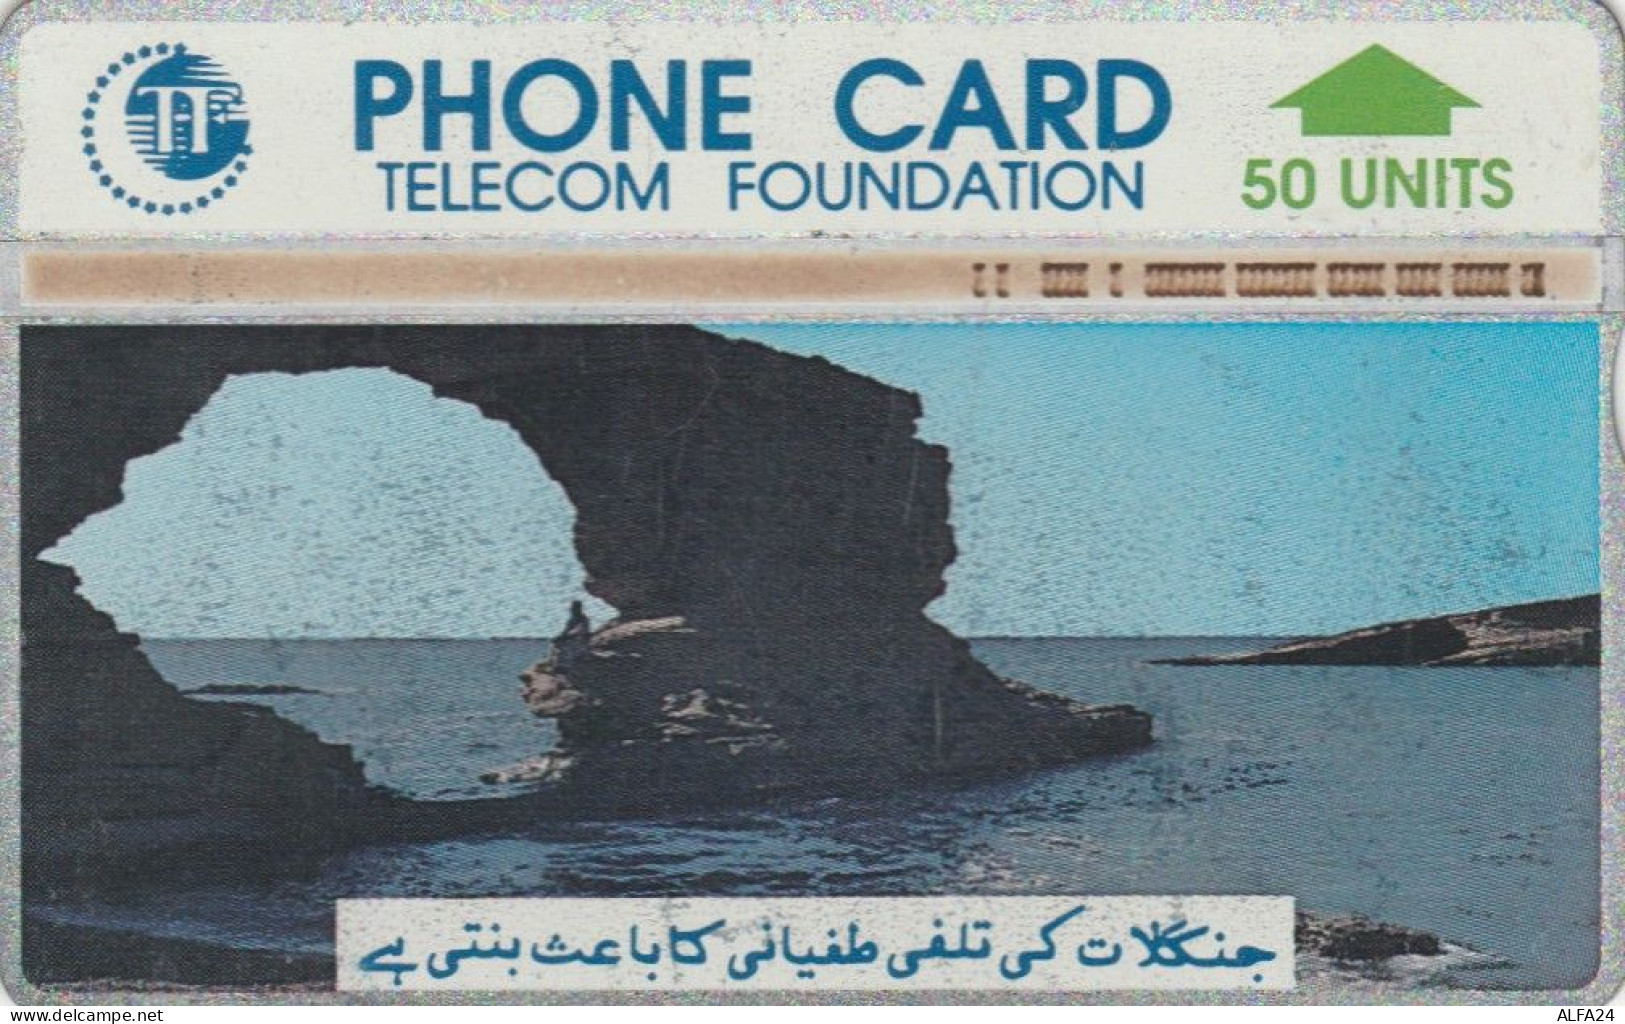 PHONE CARD PAKISTAN (E79.12.6 - Pakistan